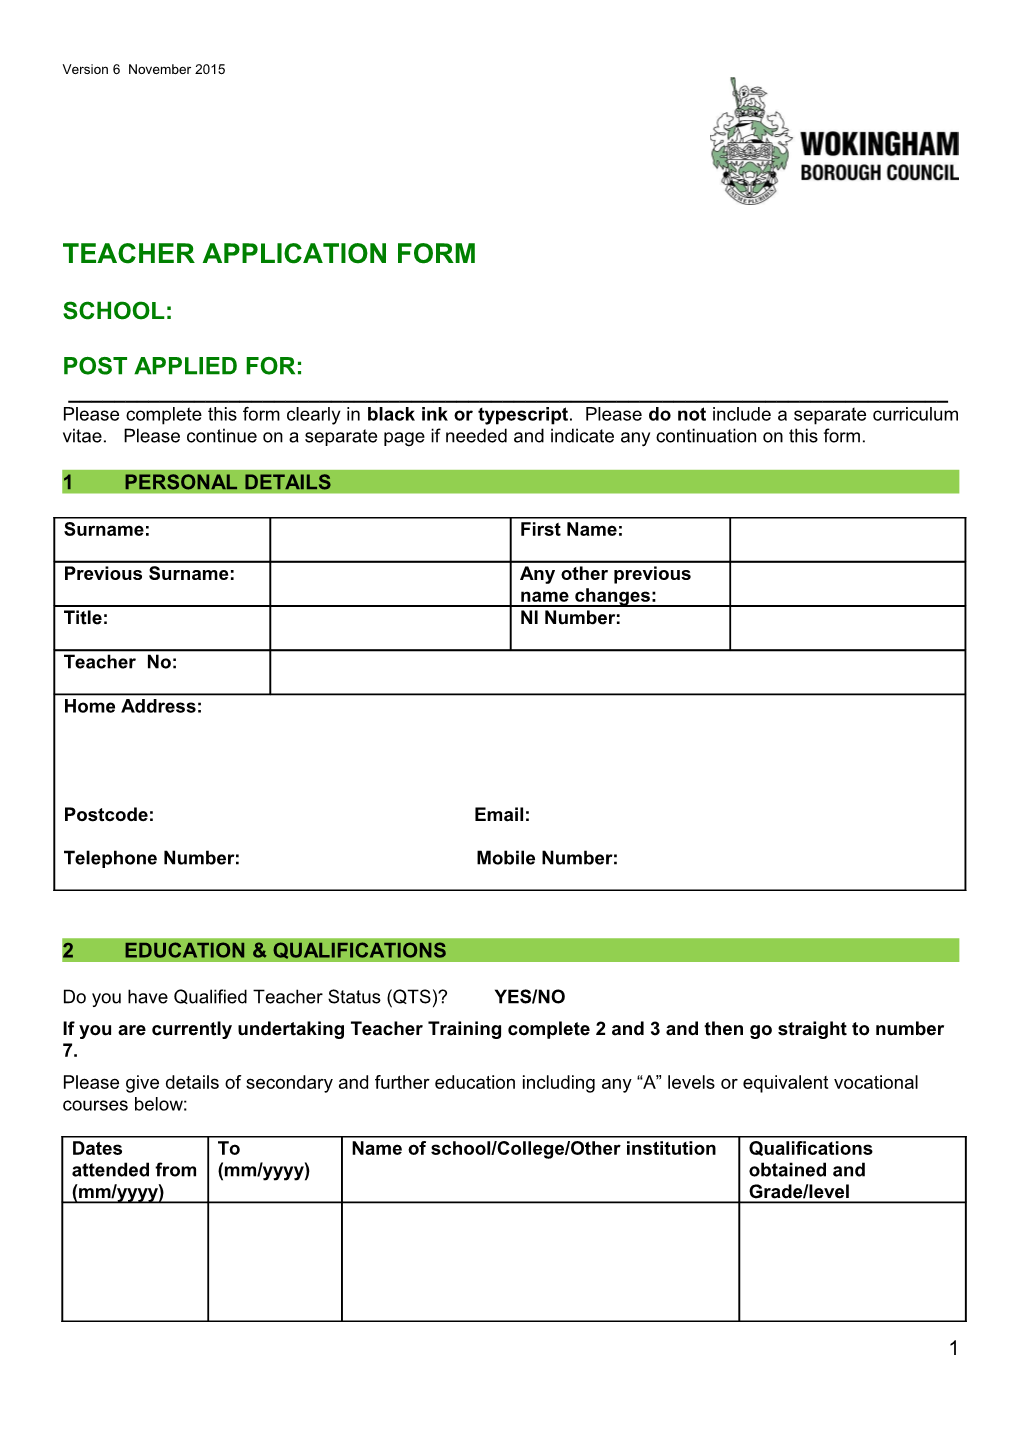 Teacher Application Form s4